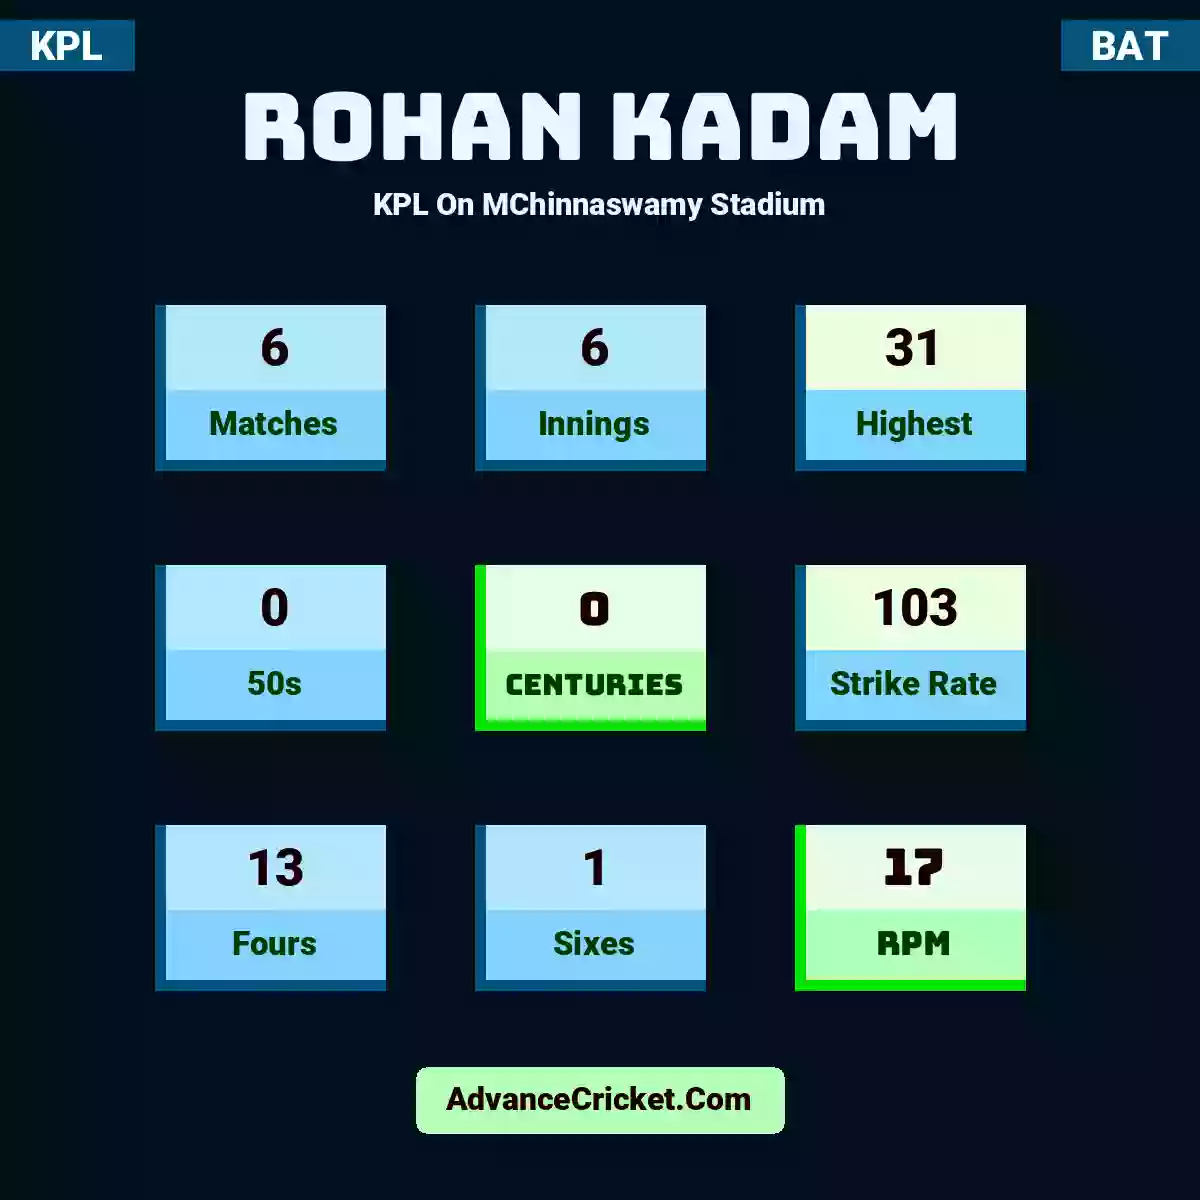 Rohan Kadam KPL  On MChinnaswamy Stadium, Rohan Kadam played 6 matches, scored 31 runs as highest, 0 half-centuries, and 0 centuries, with a strike rate of 103. R.Kadam hit 13 fours and 1 sixes, with an RPM of 17.